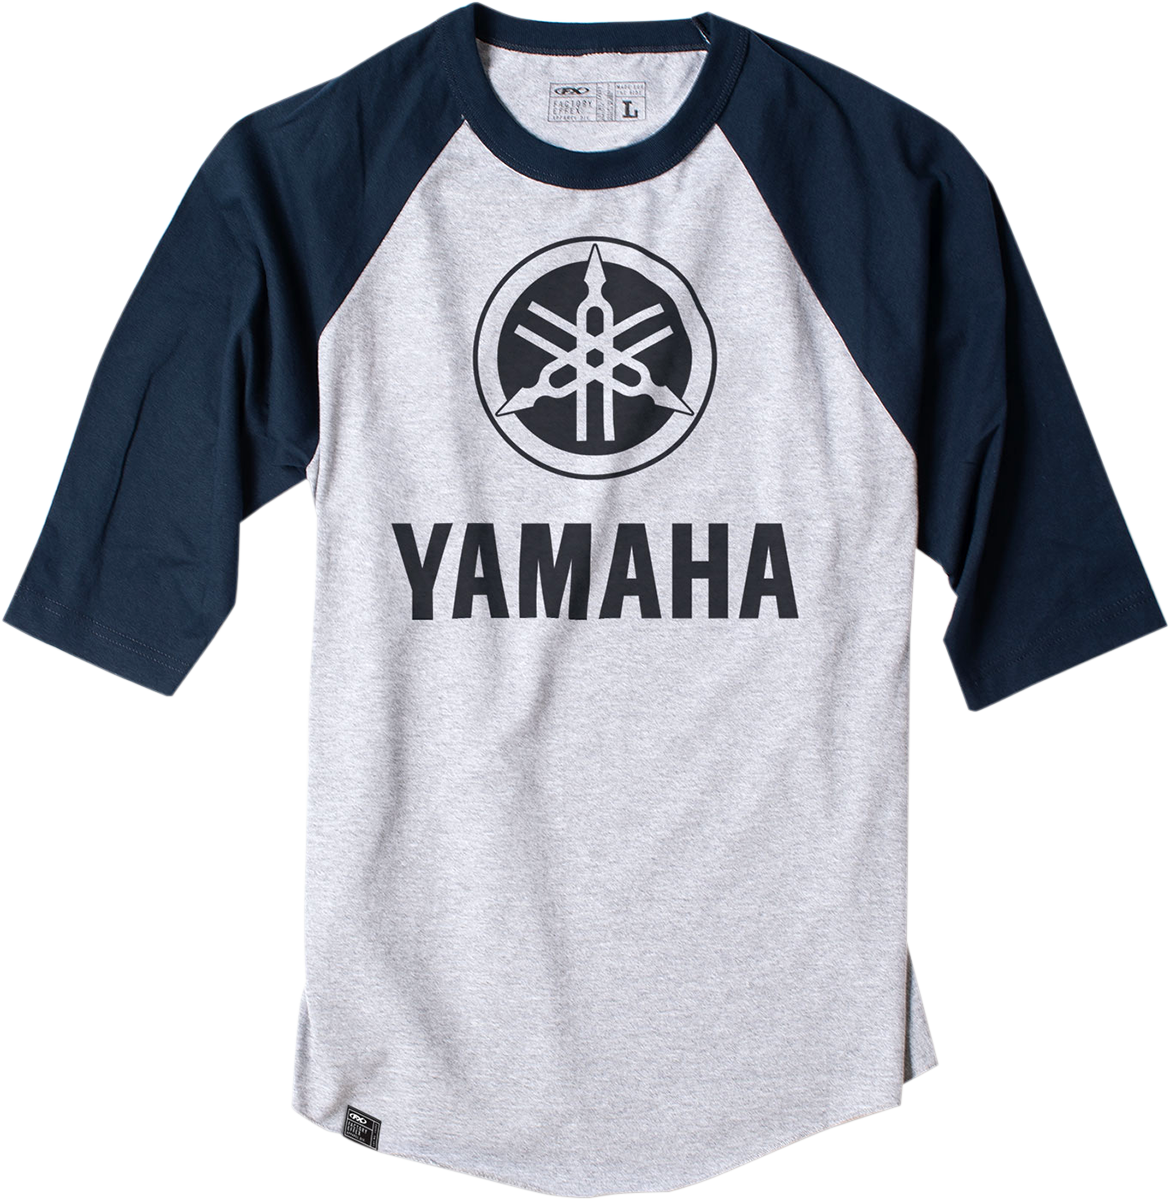 FACTORY EFFEX Yamaha Baseball T-Shirt - Grey/Blue - Medium 17-87222